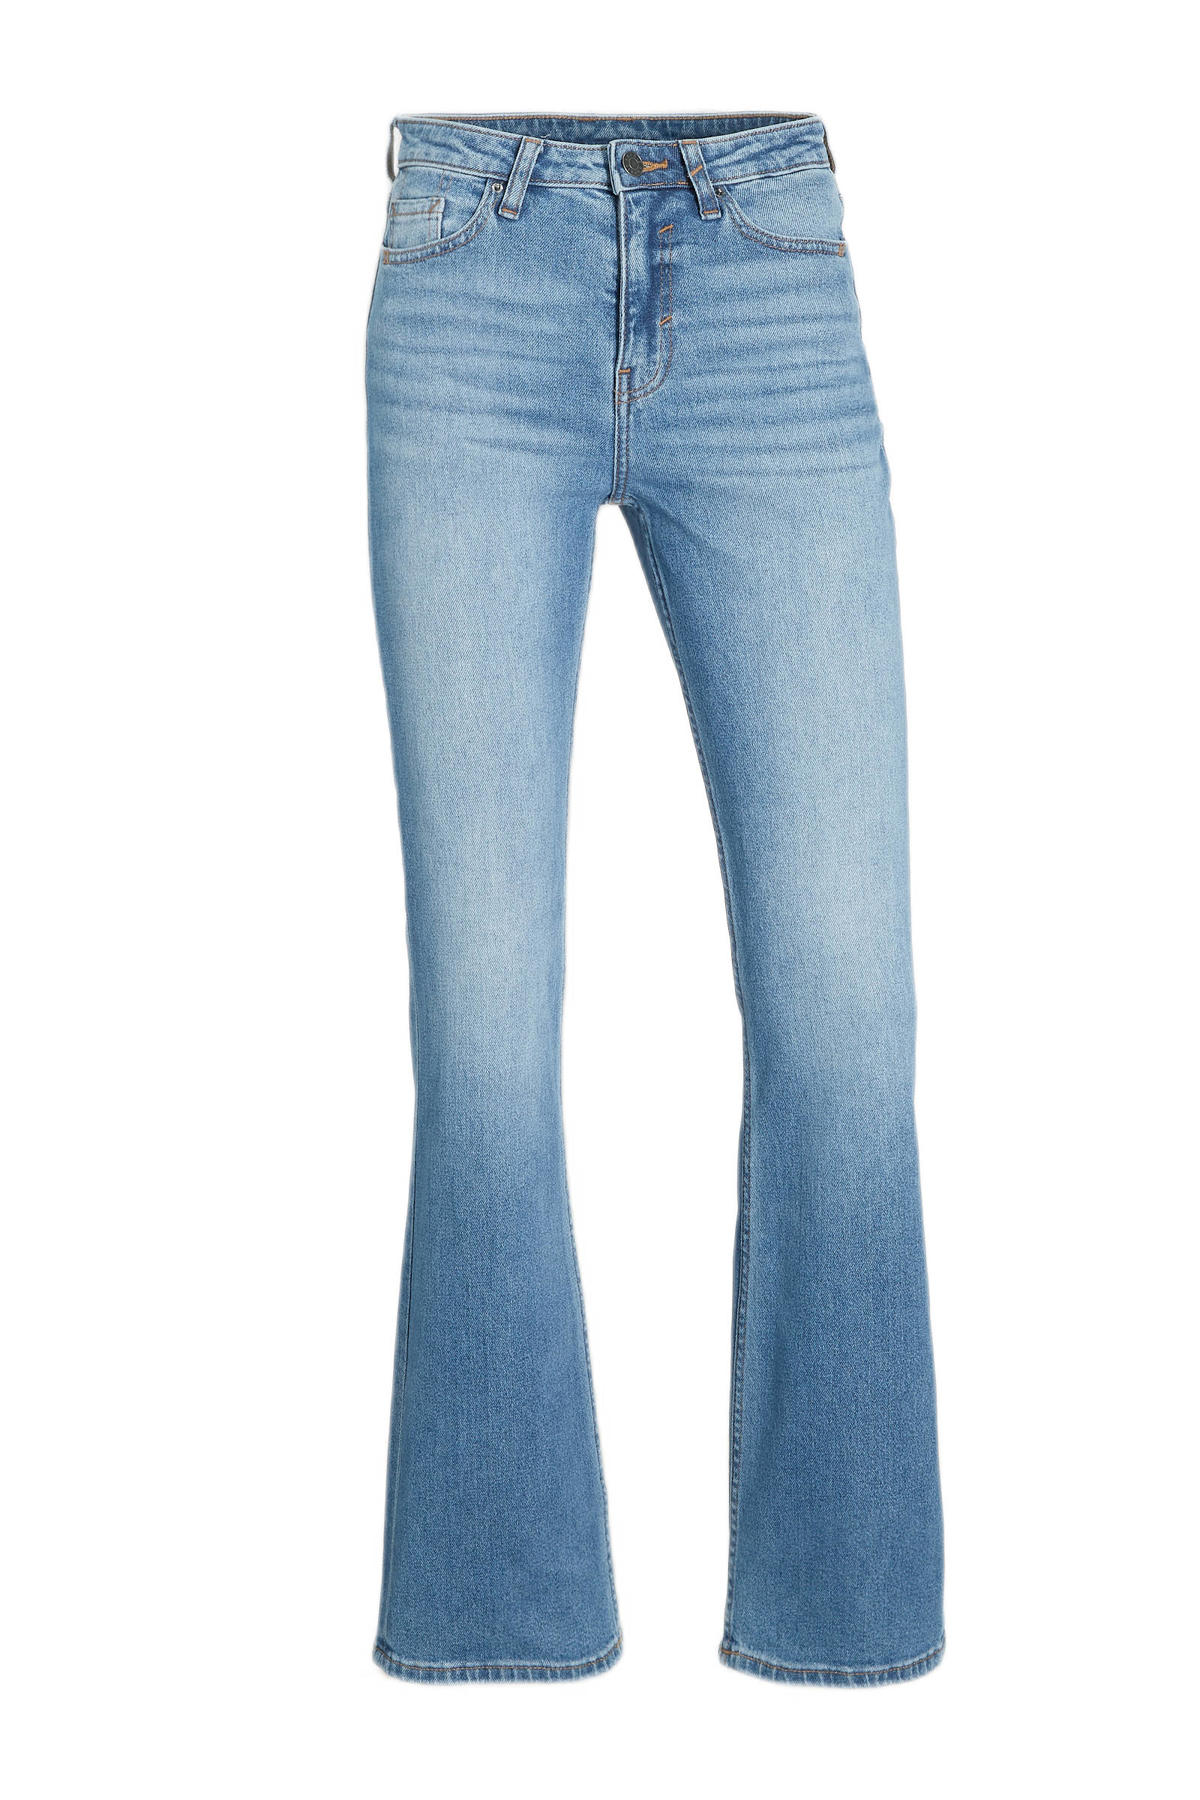 ouder Pastoor consumptie ESPRIT bootcut jeans blue light wash | wehkamp